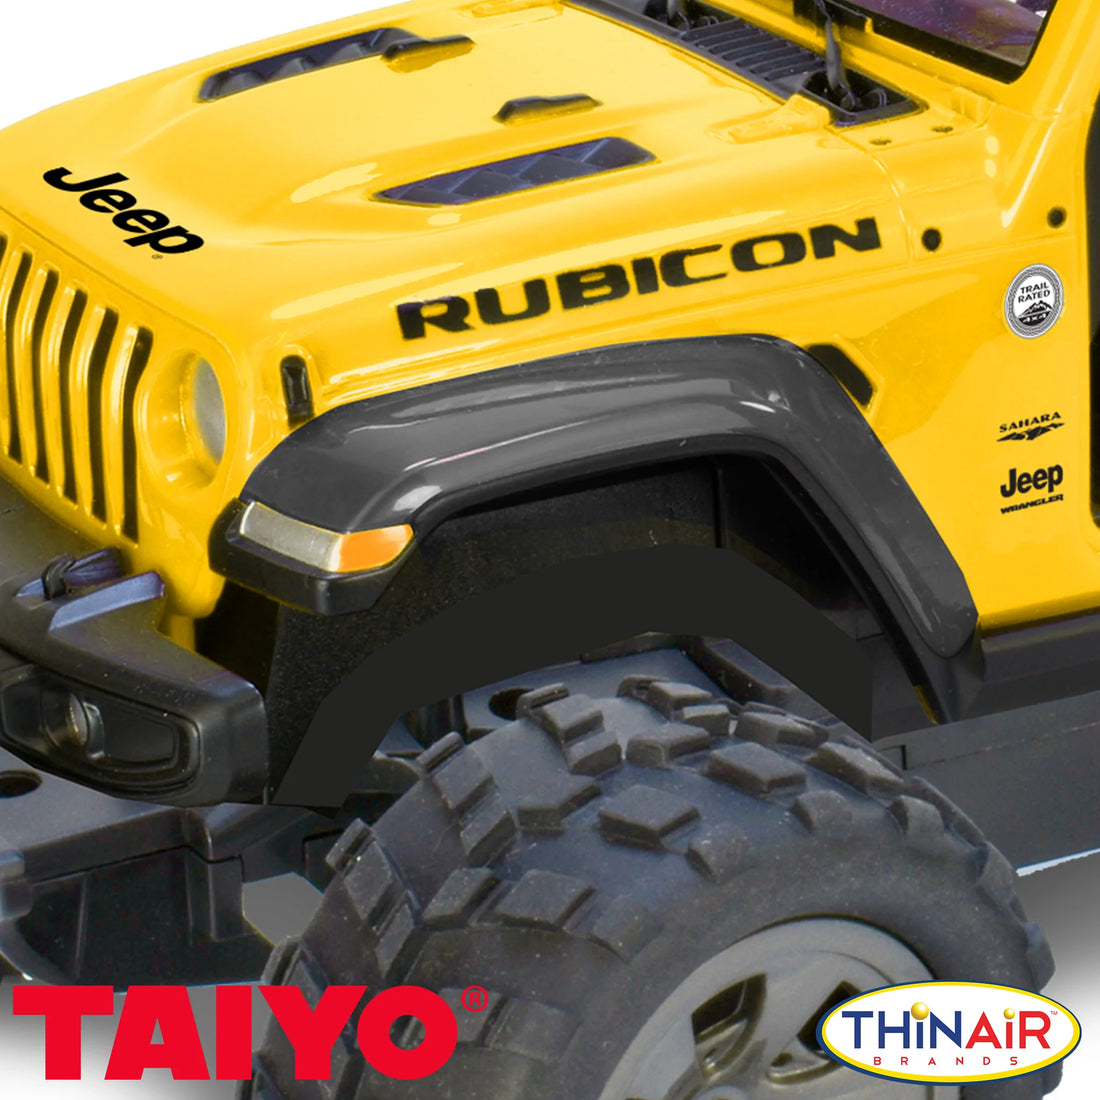 Taiyo RC Jeep Rubicon Preview #2